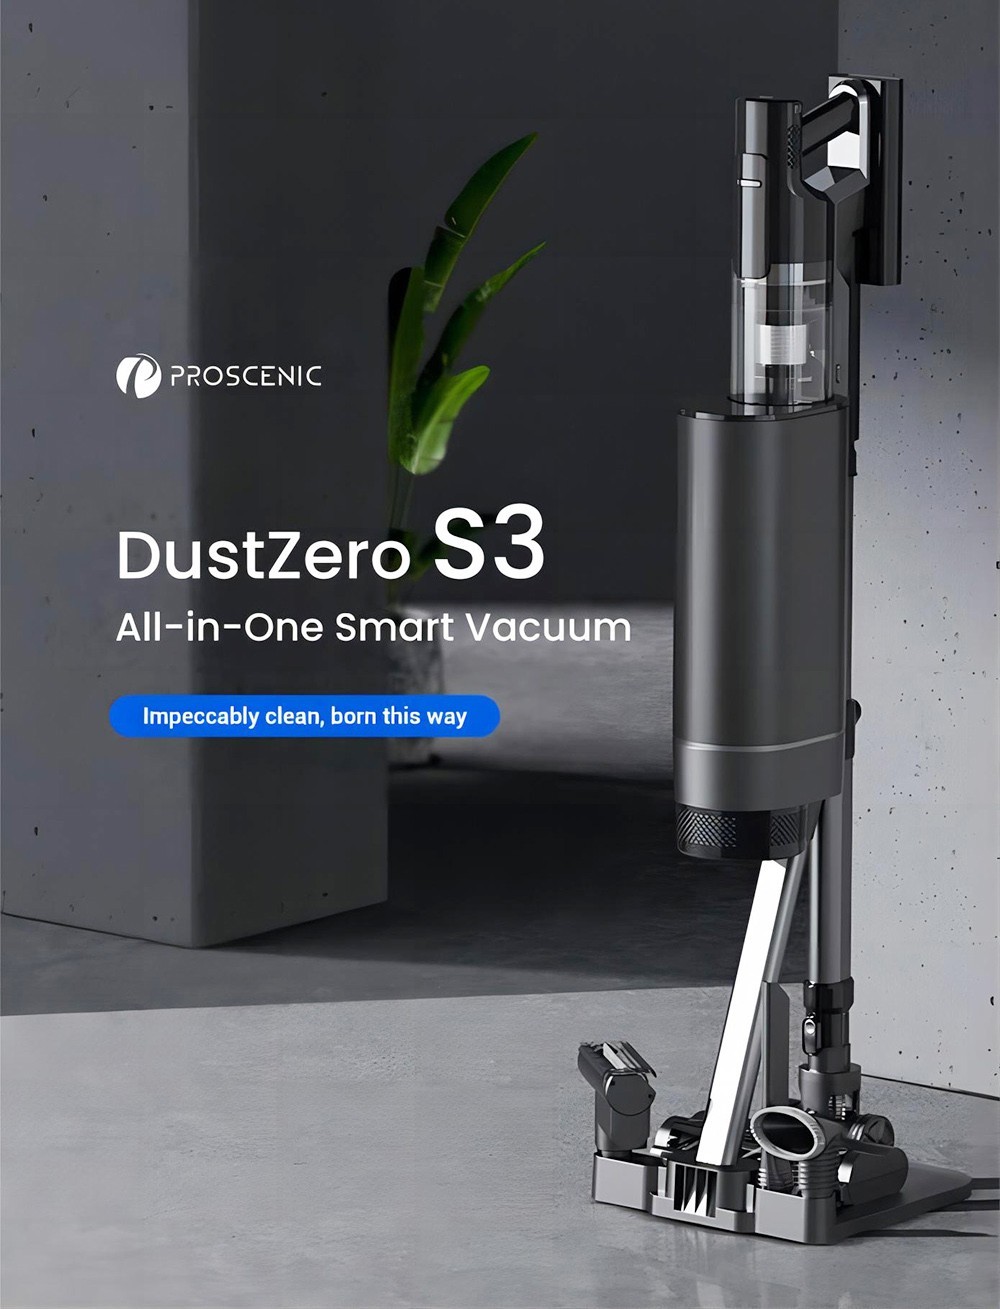 Aspirateur sans fil Proscenic DustZero S3